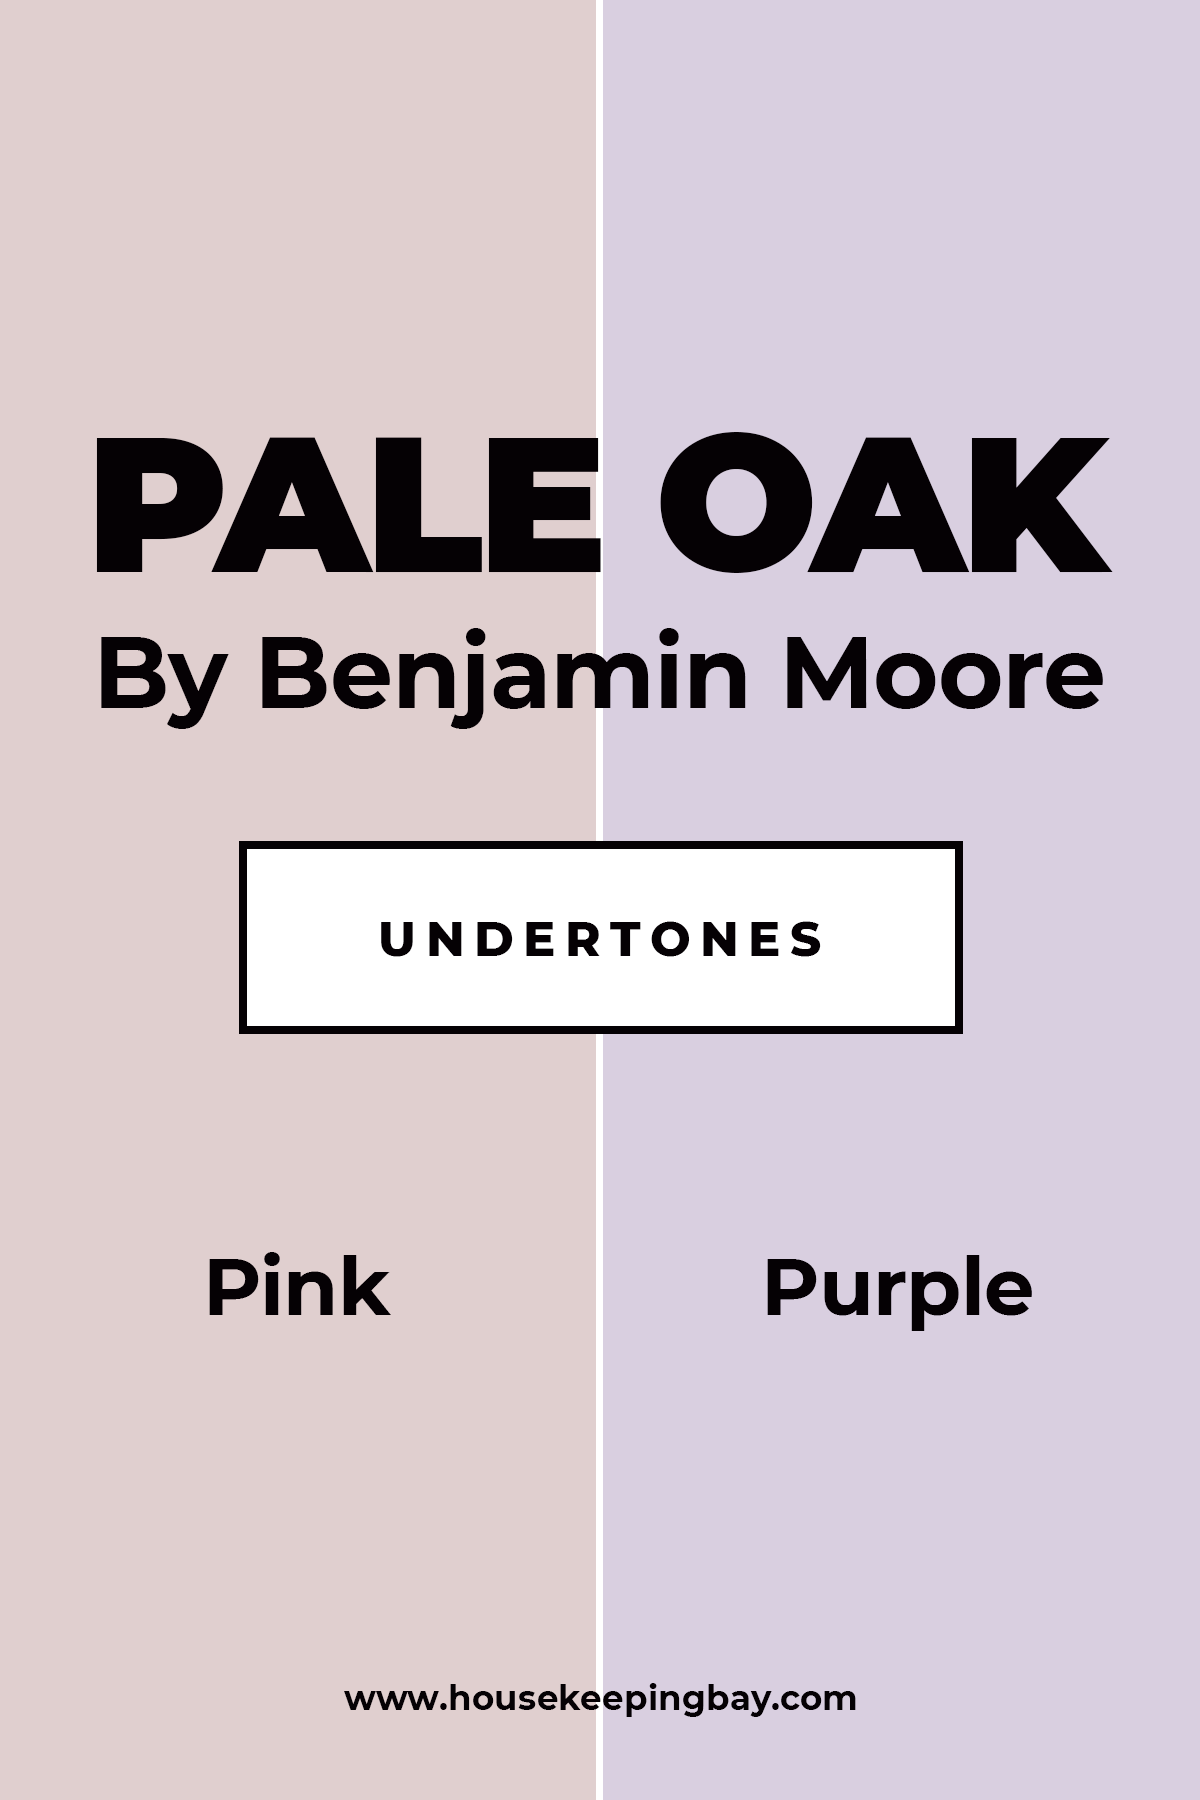 Pale Oak Undertones